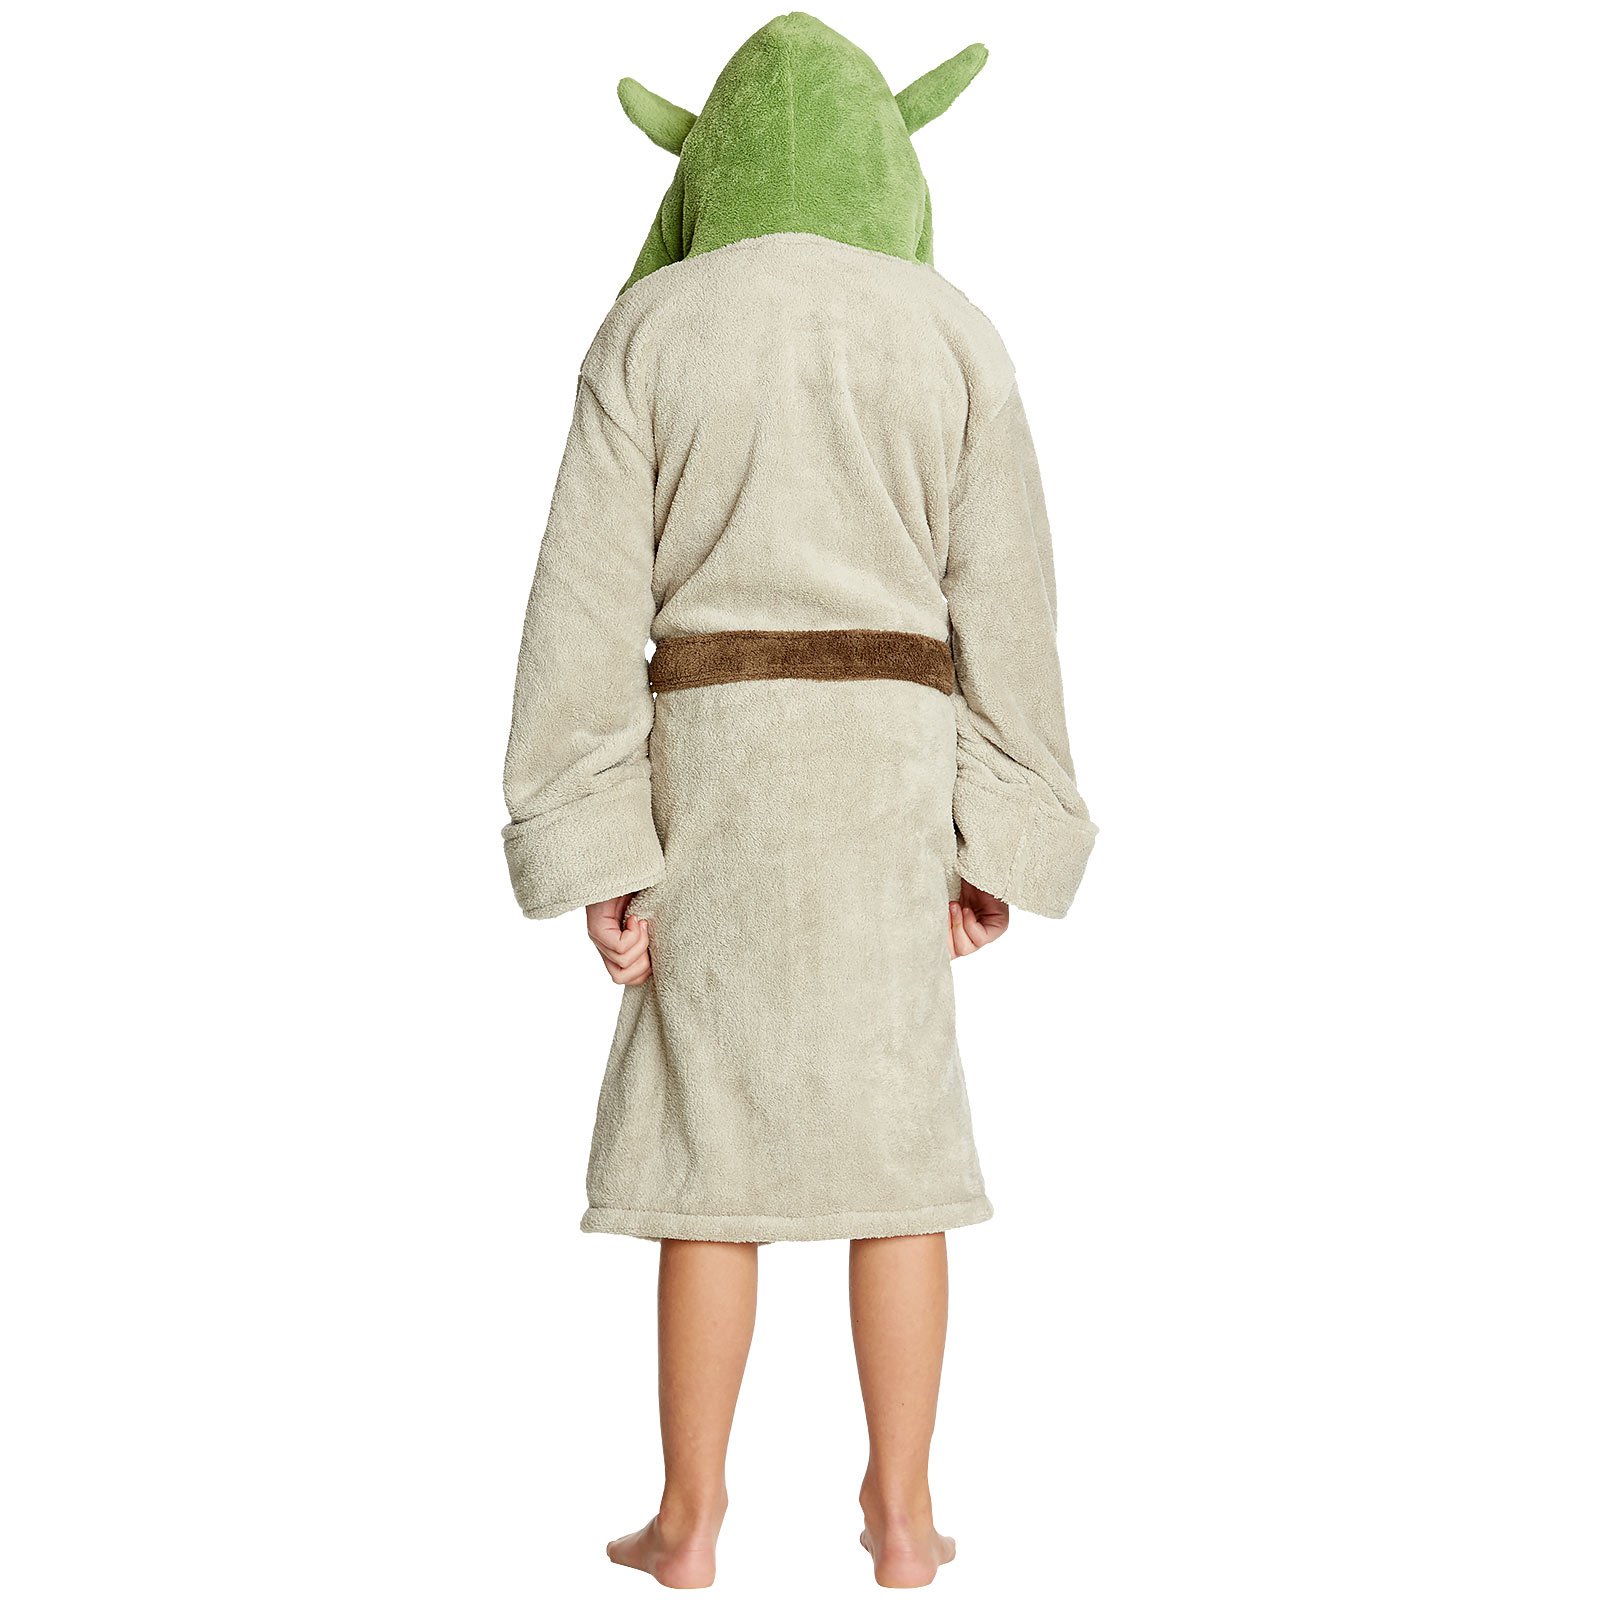 Star Wars - Yoda Kinderbadjas